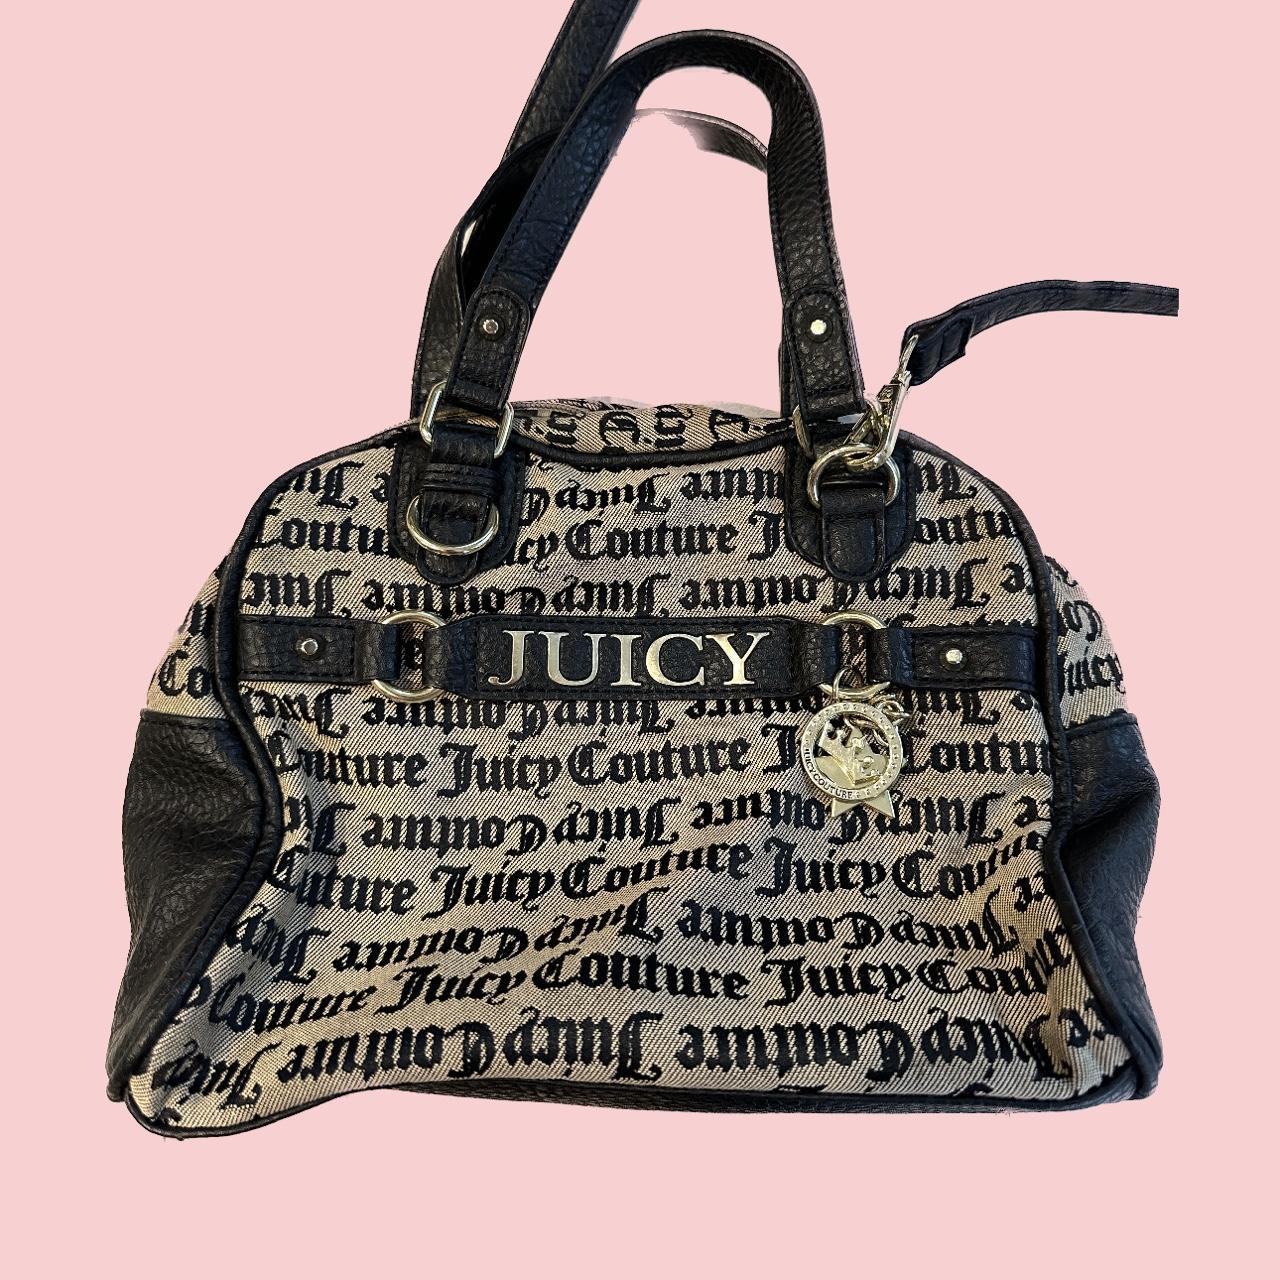 Juicy Couture Women's Grey and Black Bag | Depop